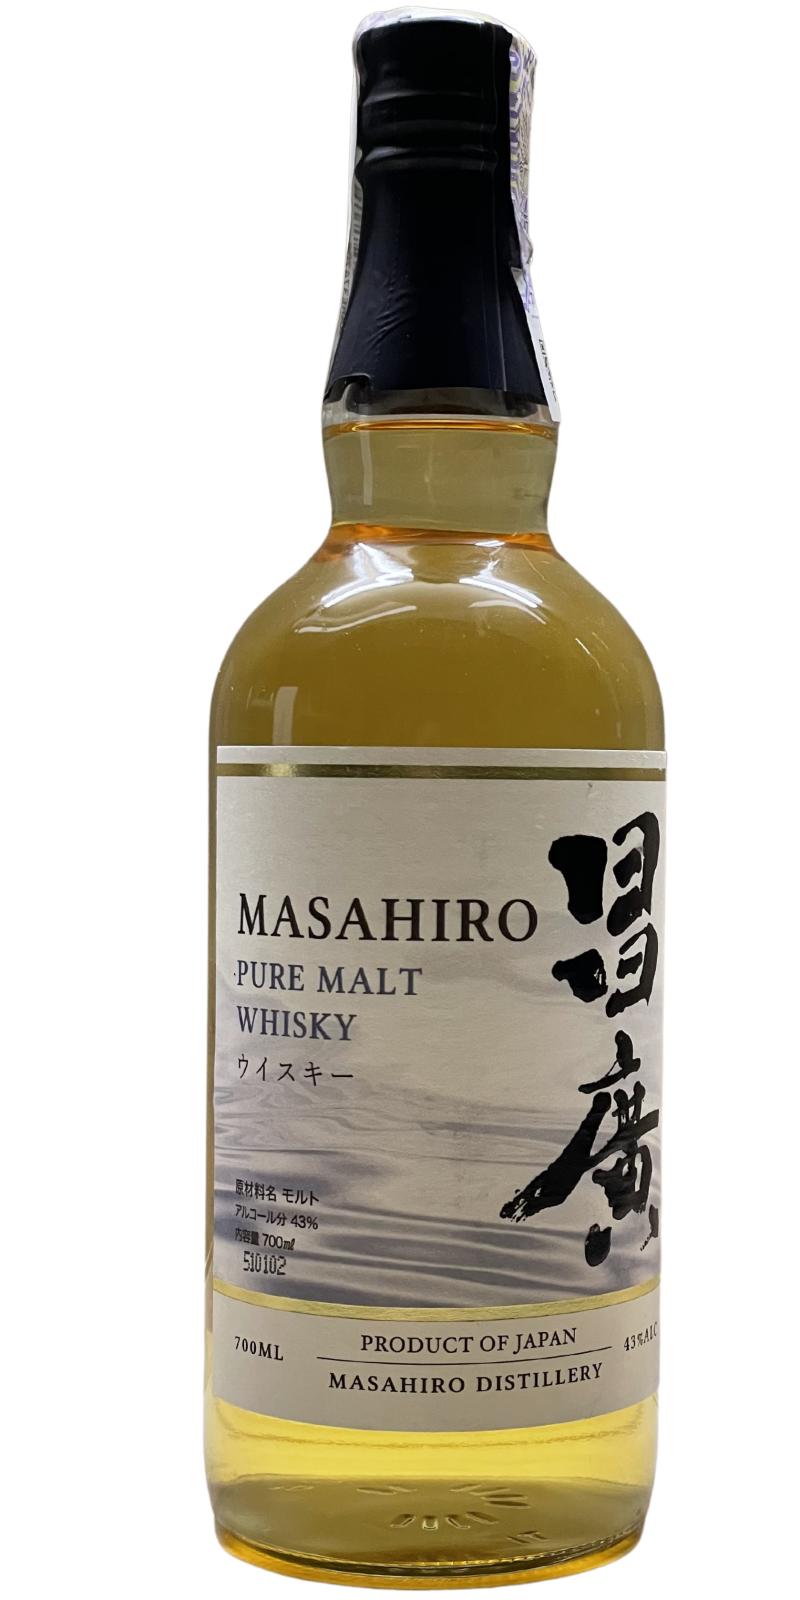 Masahiro Pure Malt Whisky 43% Vol. 0,7l in Giftbox